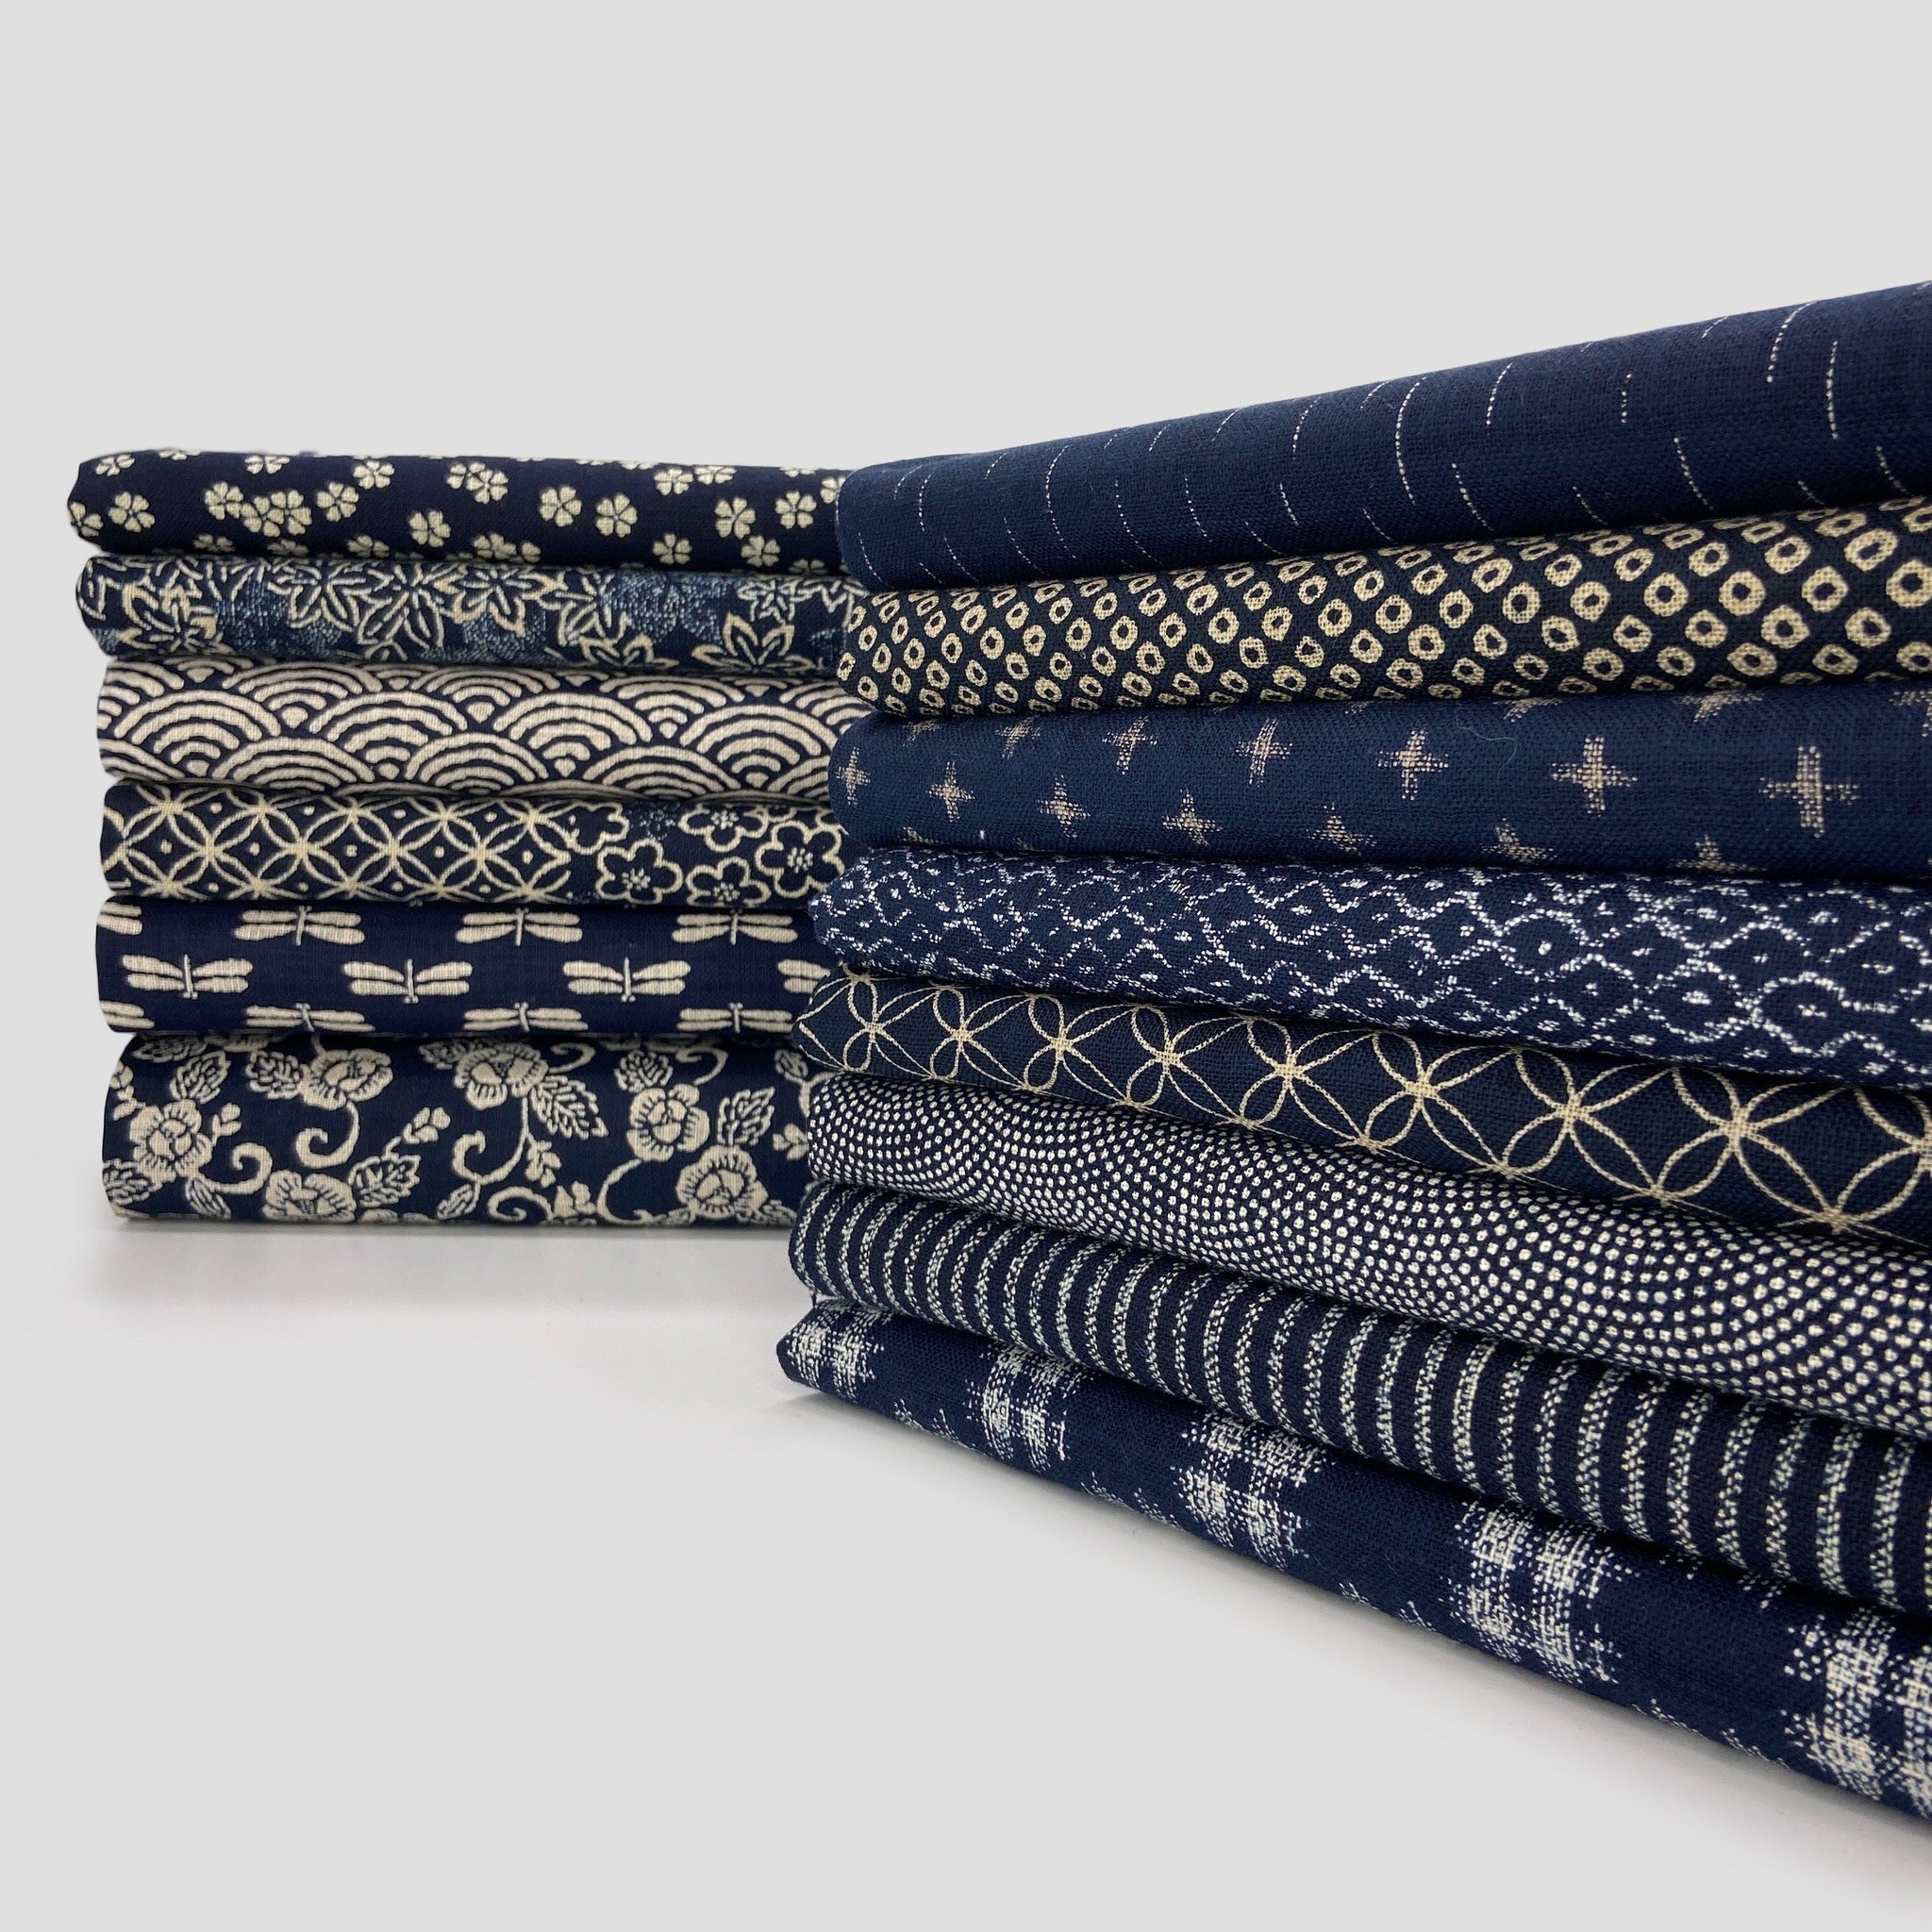 Japanese Cotton Uneven Yarns Sheeting Print - Indigo Basket Weave